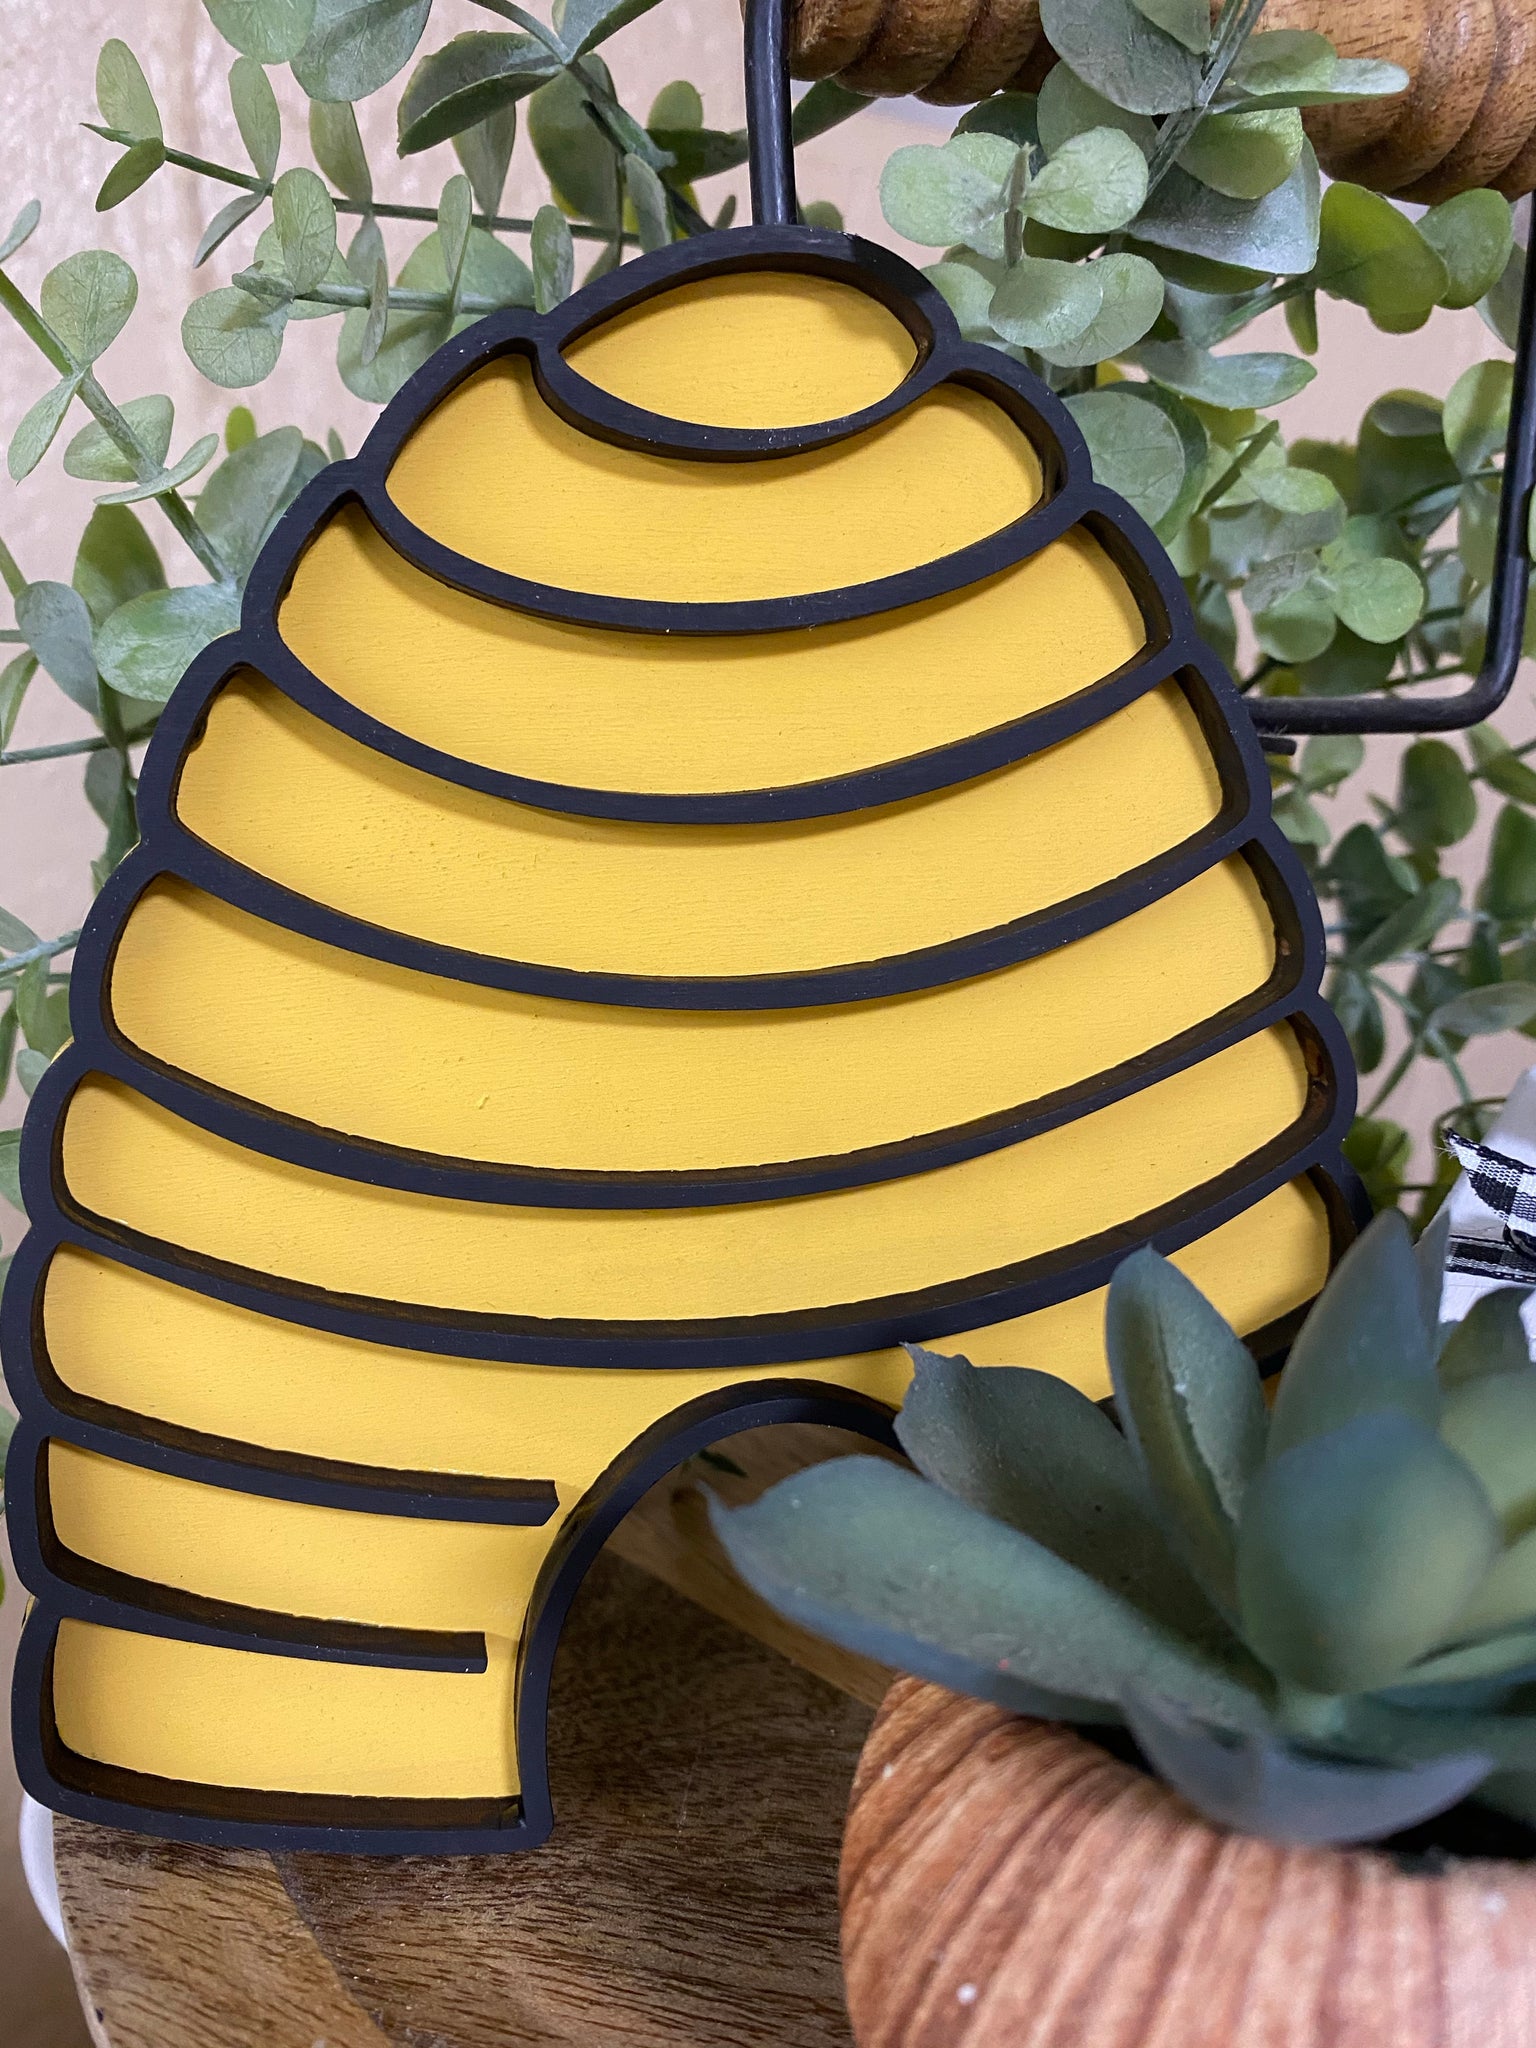 Black White & Yellow Honeybee /bumble Bee Tiered Tray Set 